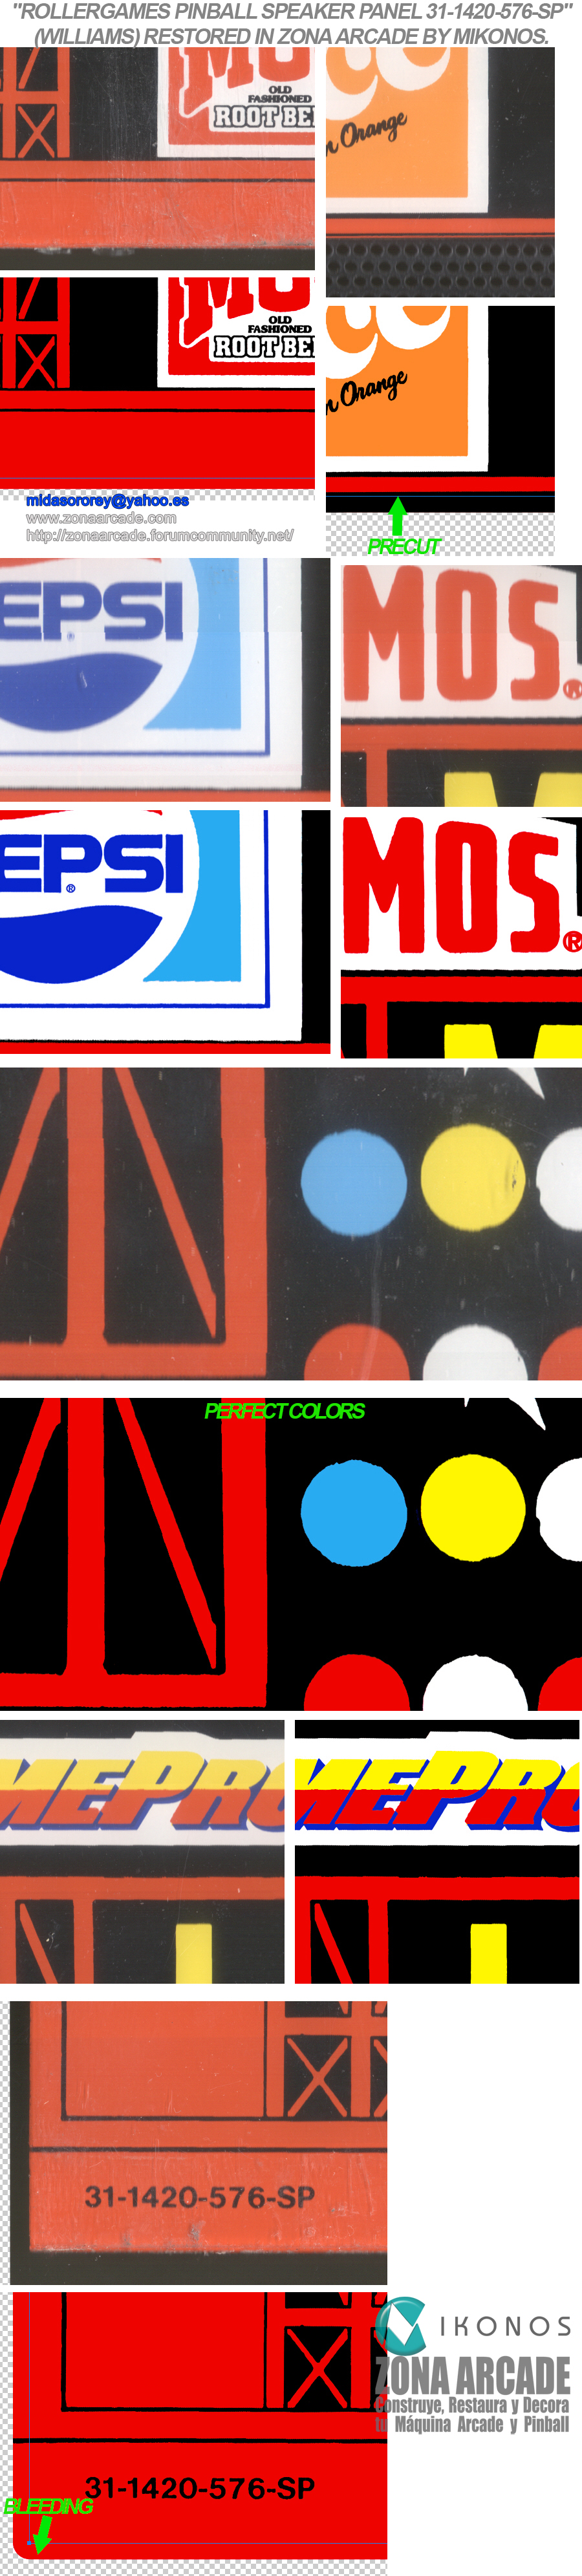 Rollergames-Pinball-Speaker-Panel-Restored-Mikonos3